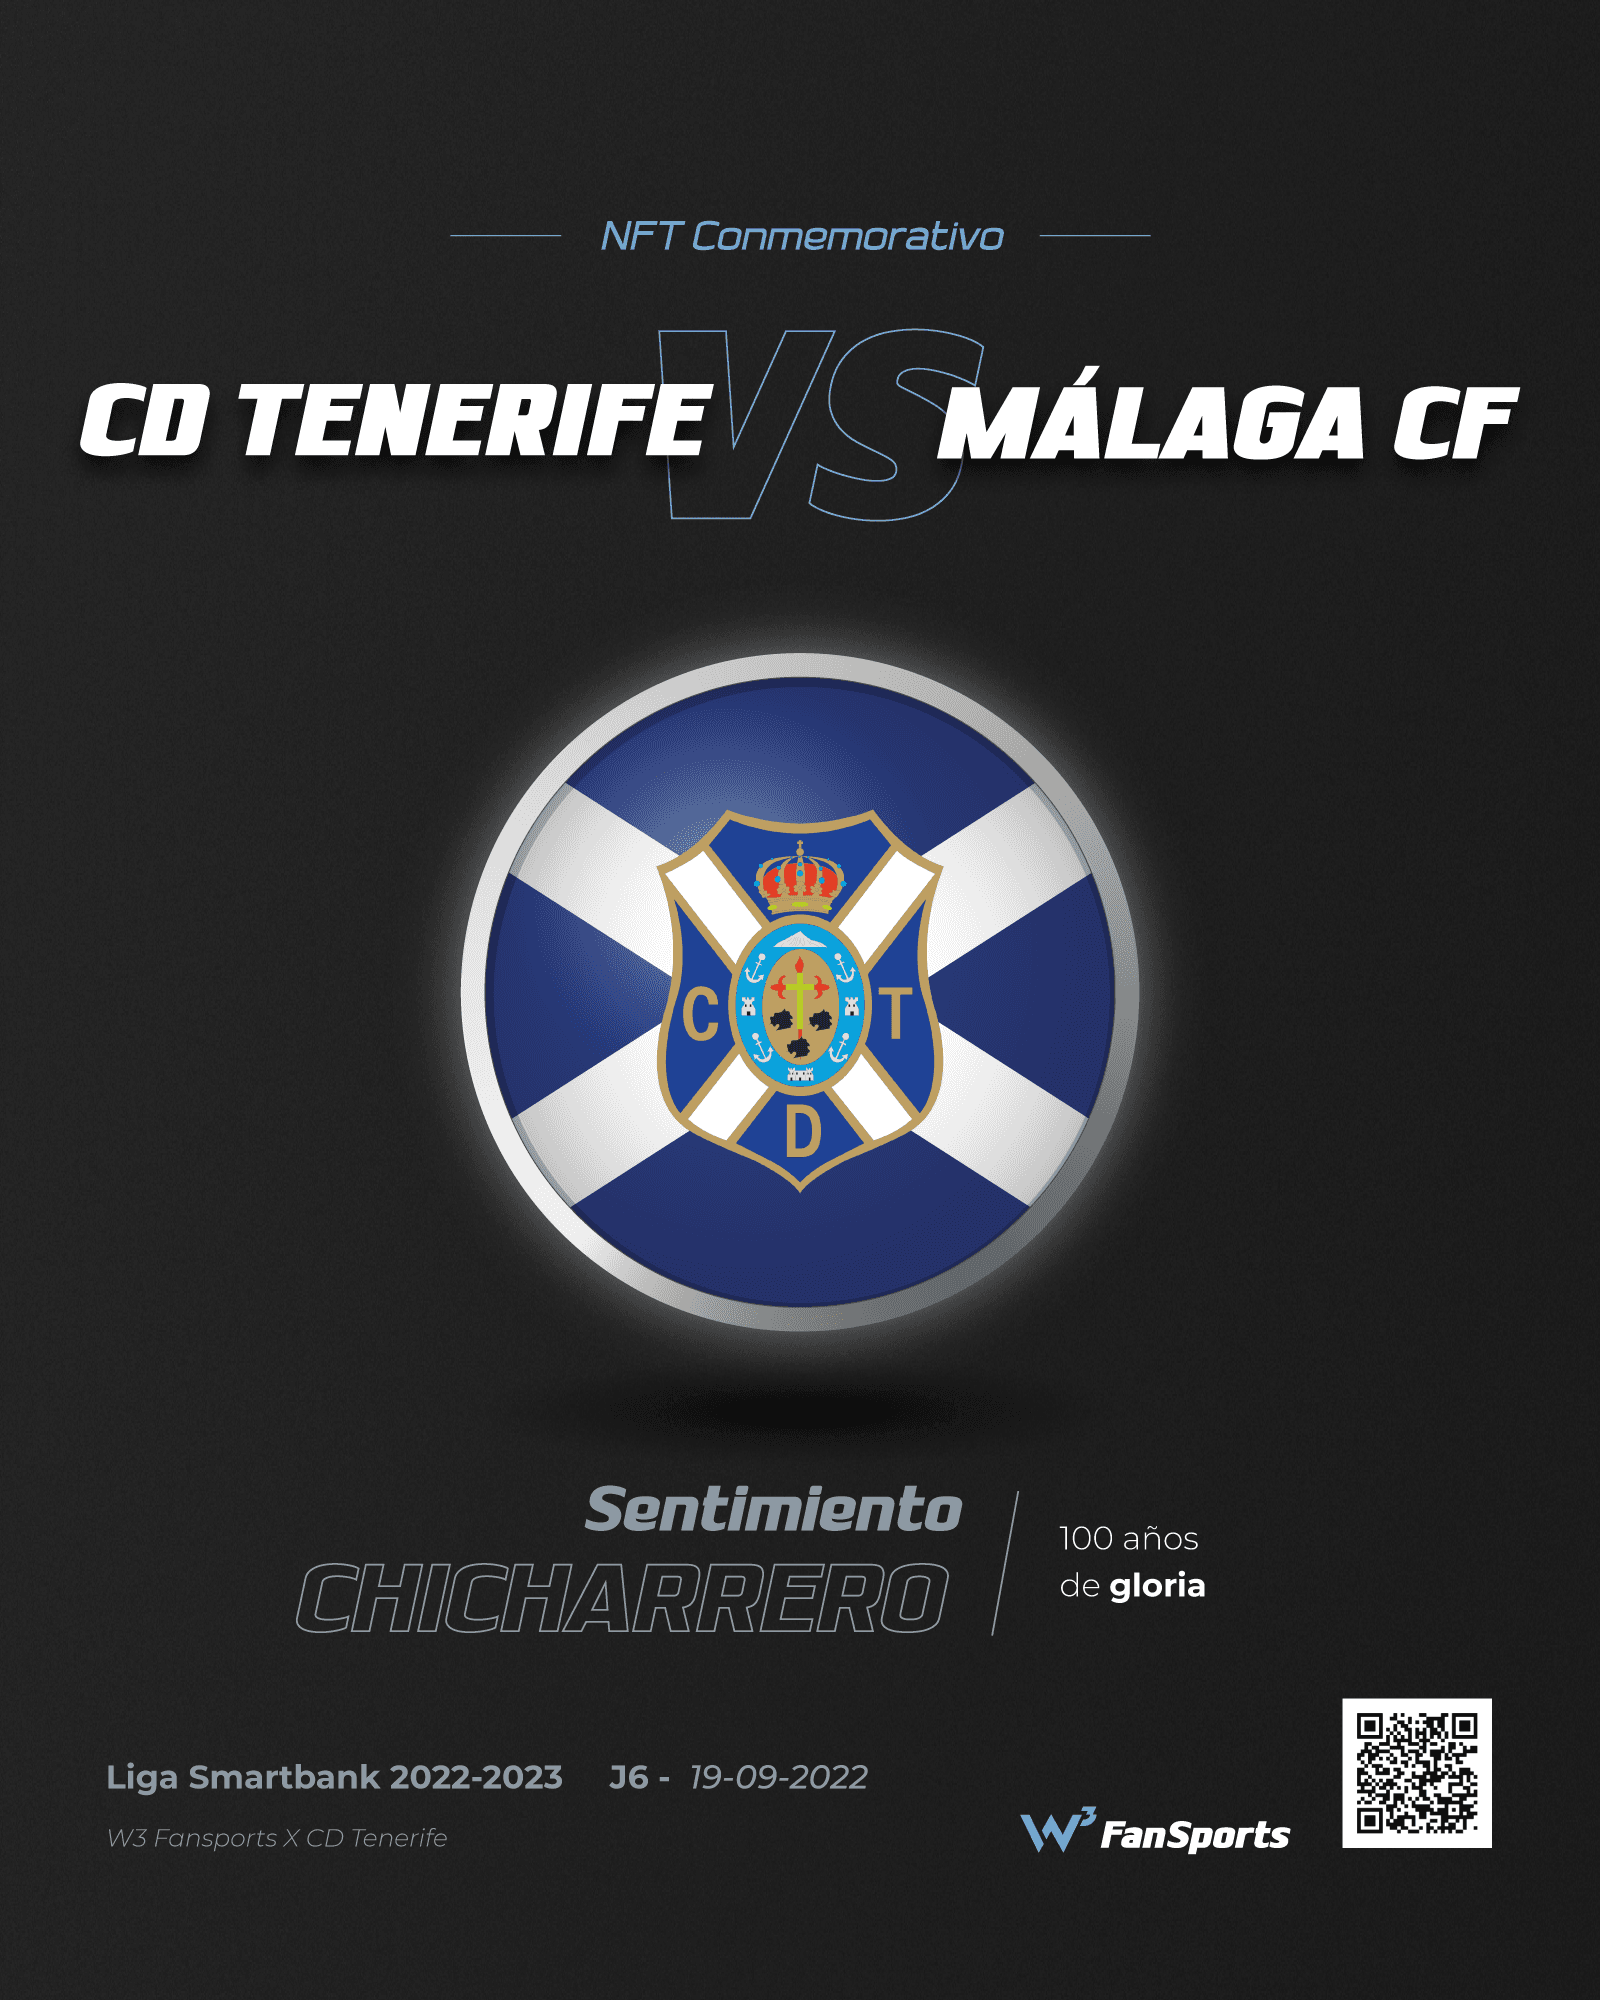 CD Tenerife vs Málaga CF J6 19/09/2022 - Conmemorativo